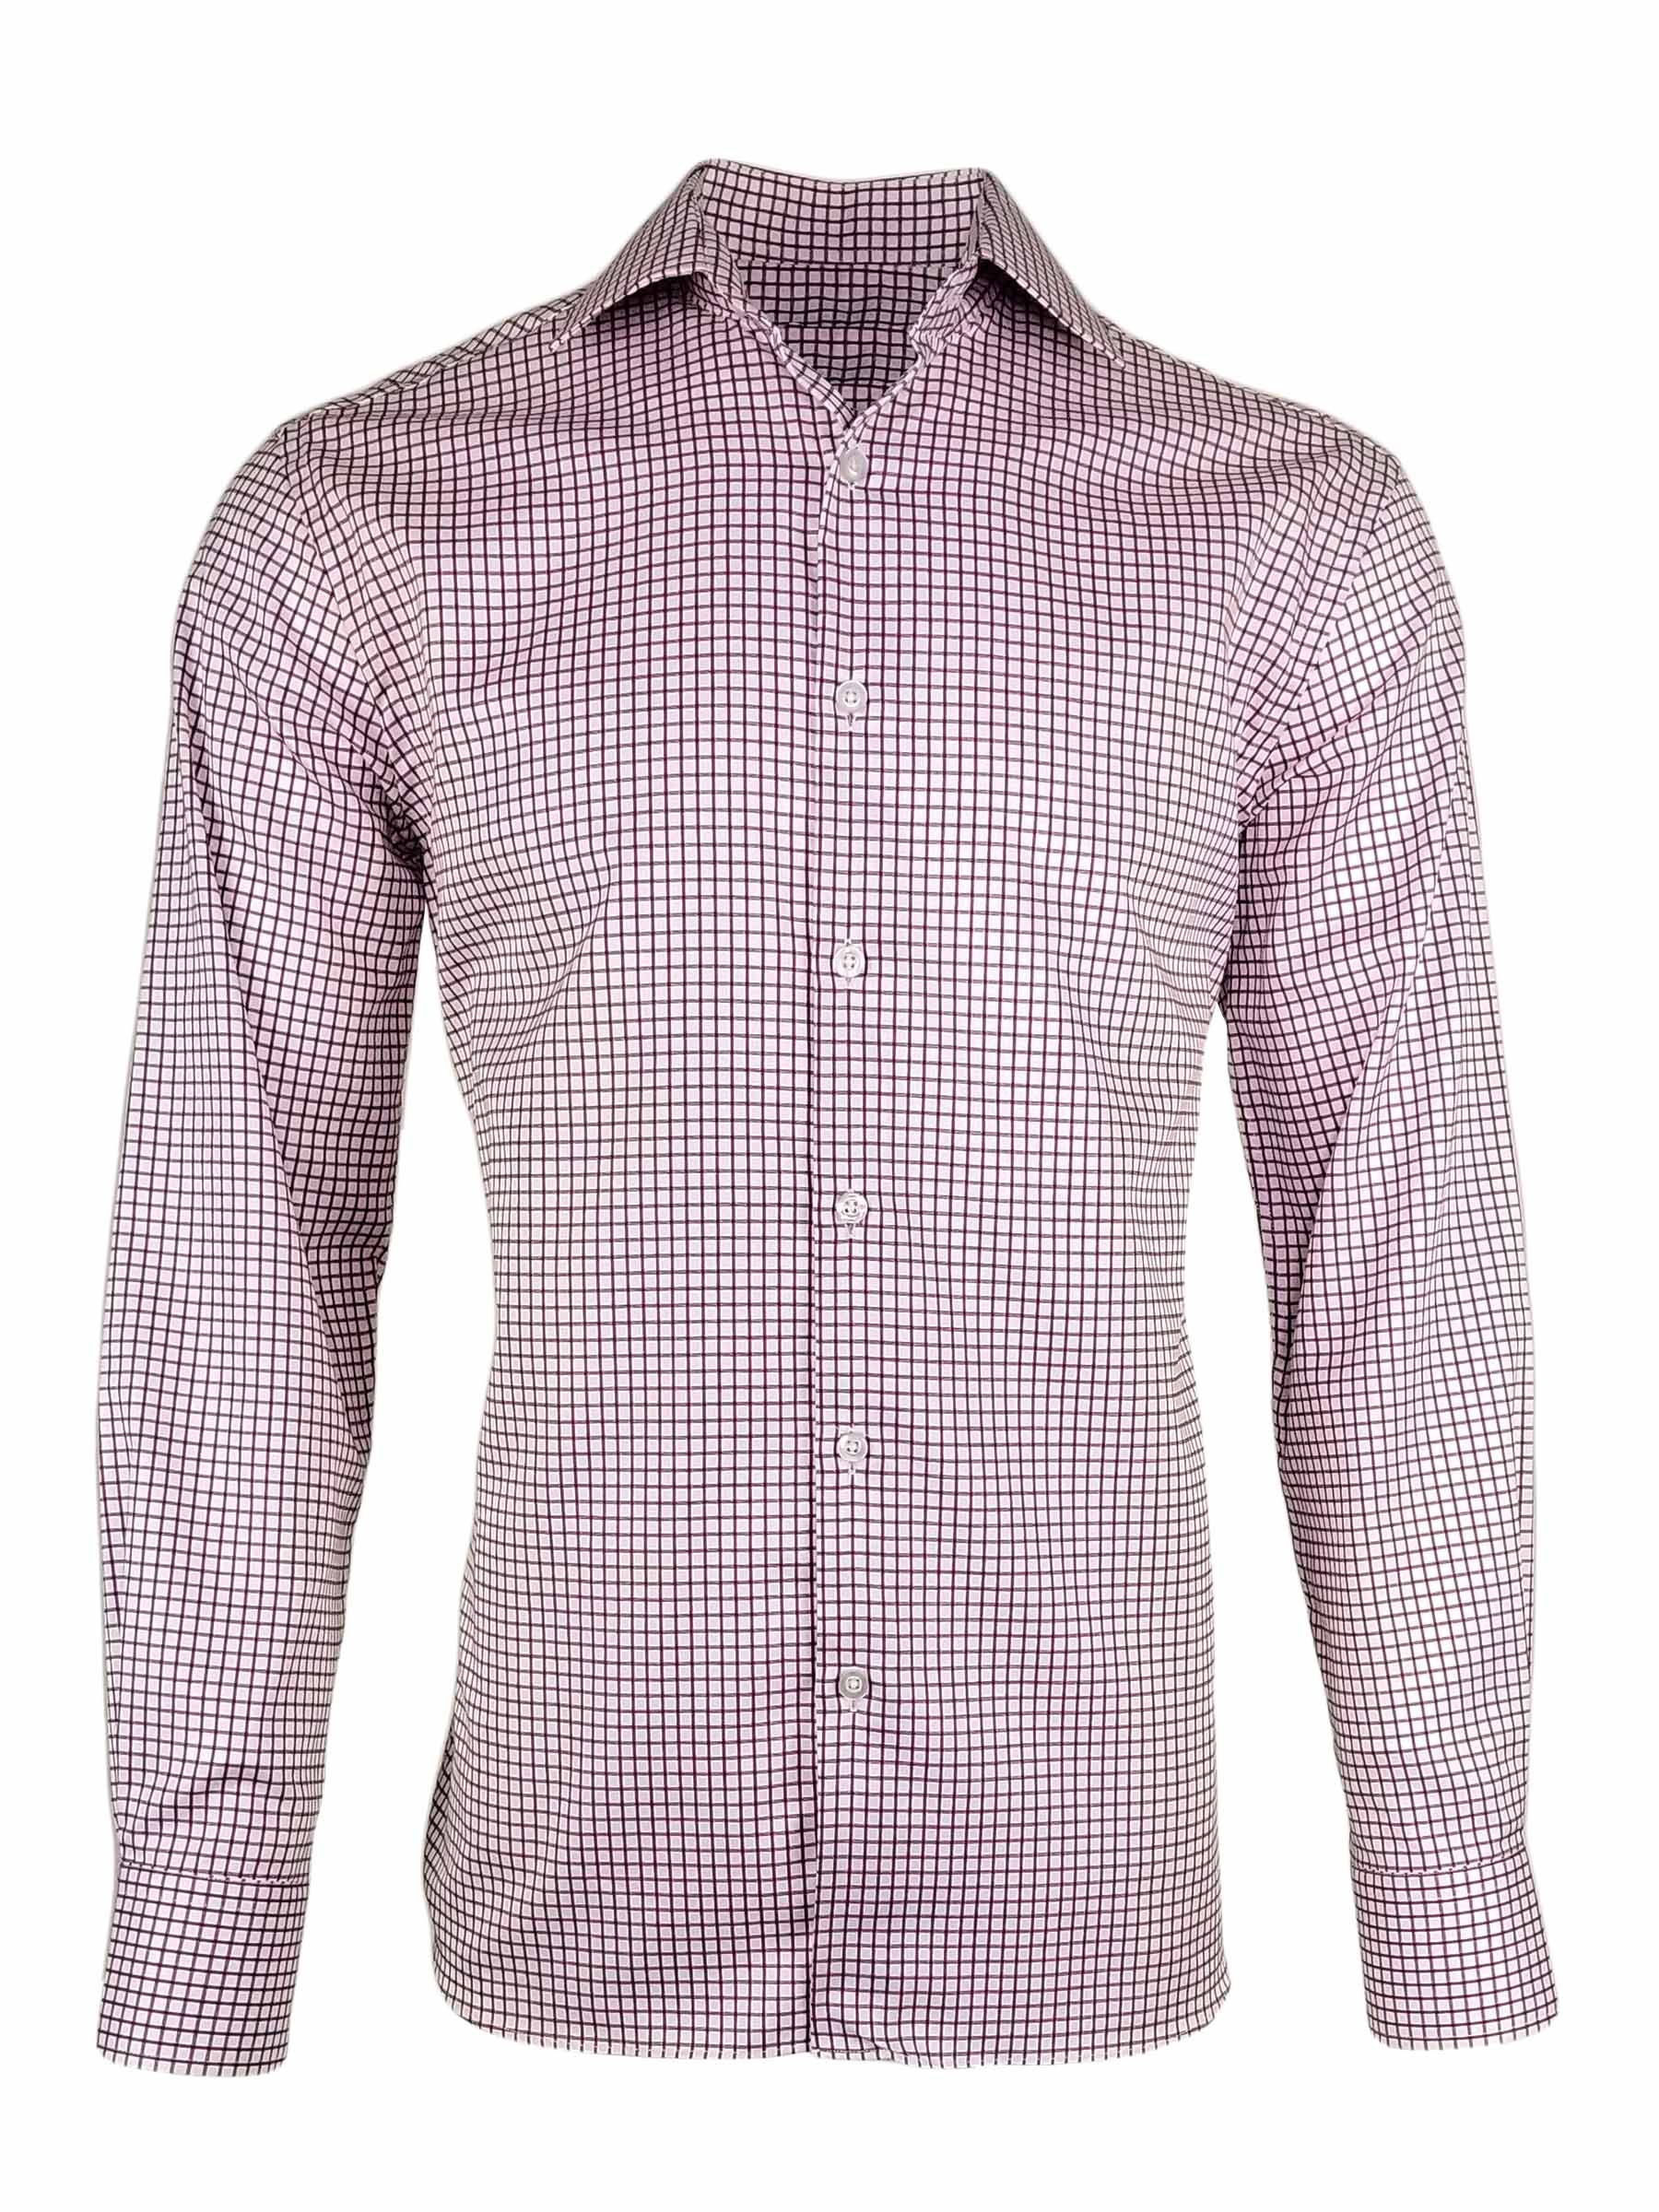 Men's Himalaya Shirt - Grape Check Long Sleeve - Uniform Edit